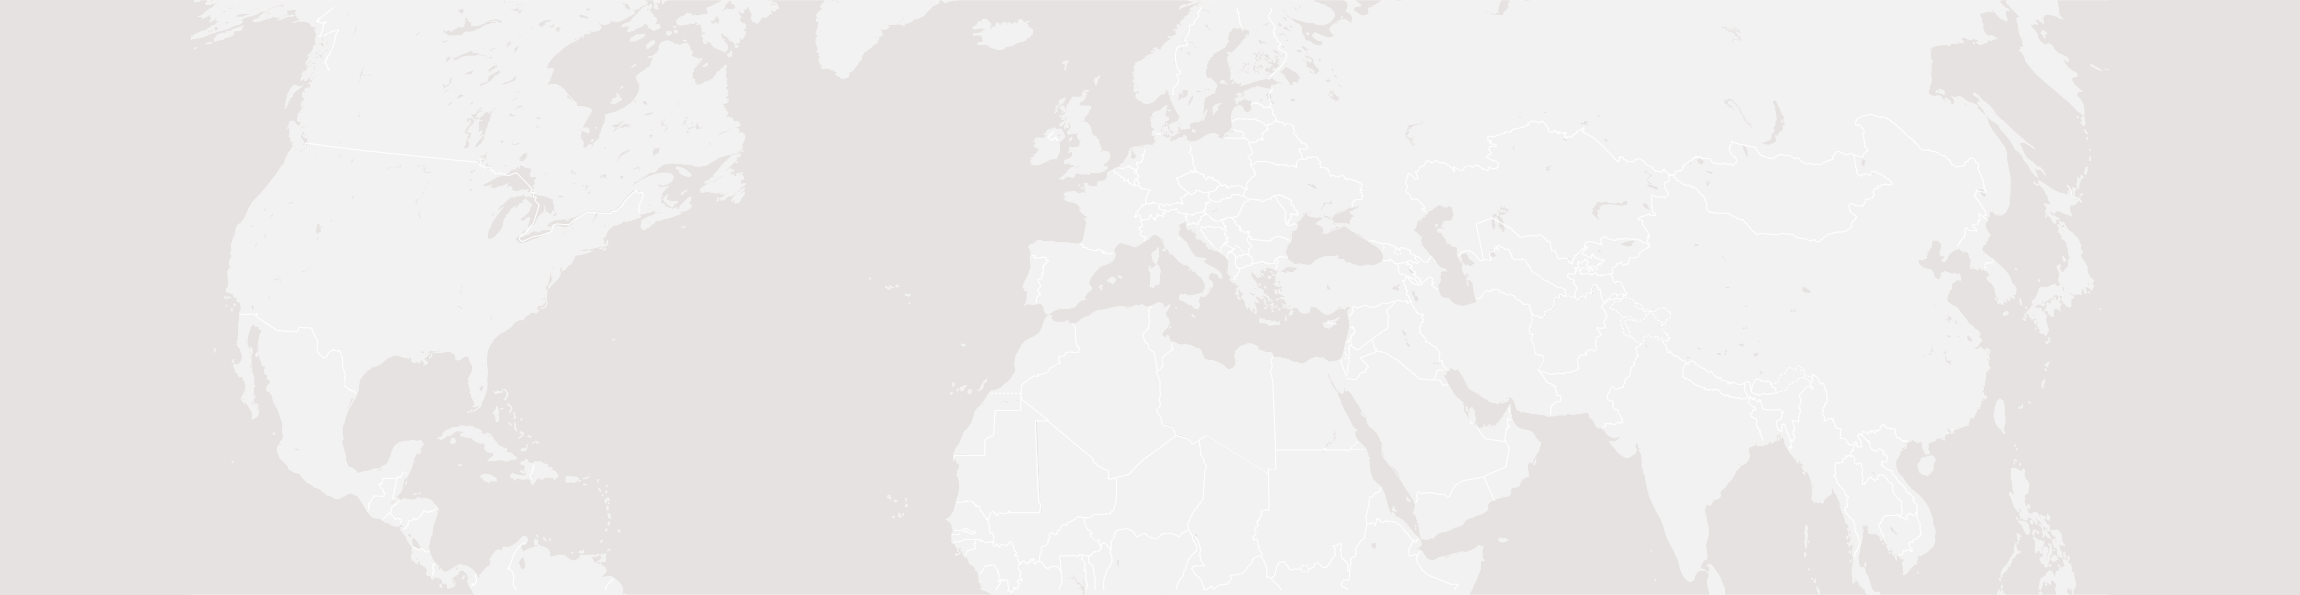 Weltkarte mit Fokus Europa